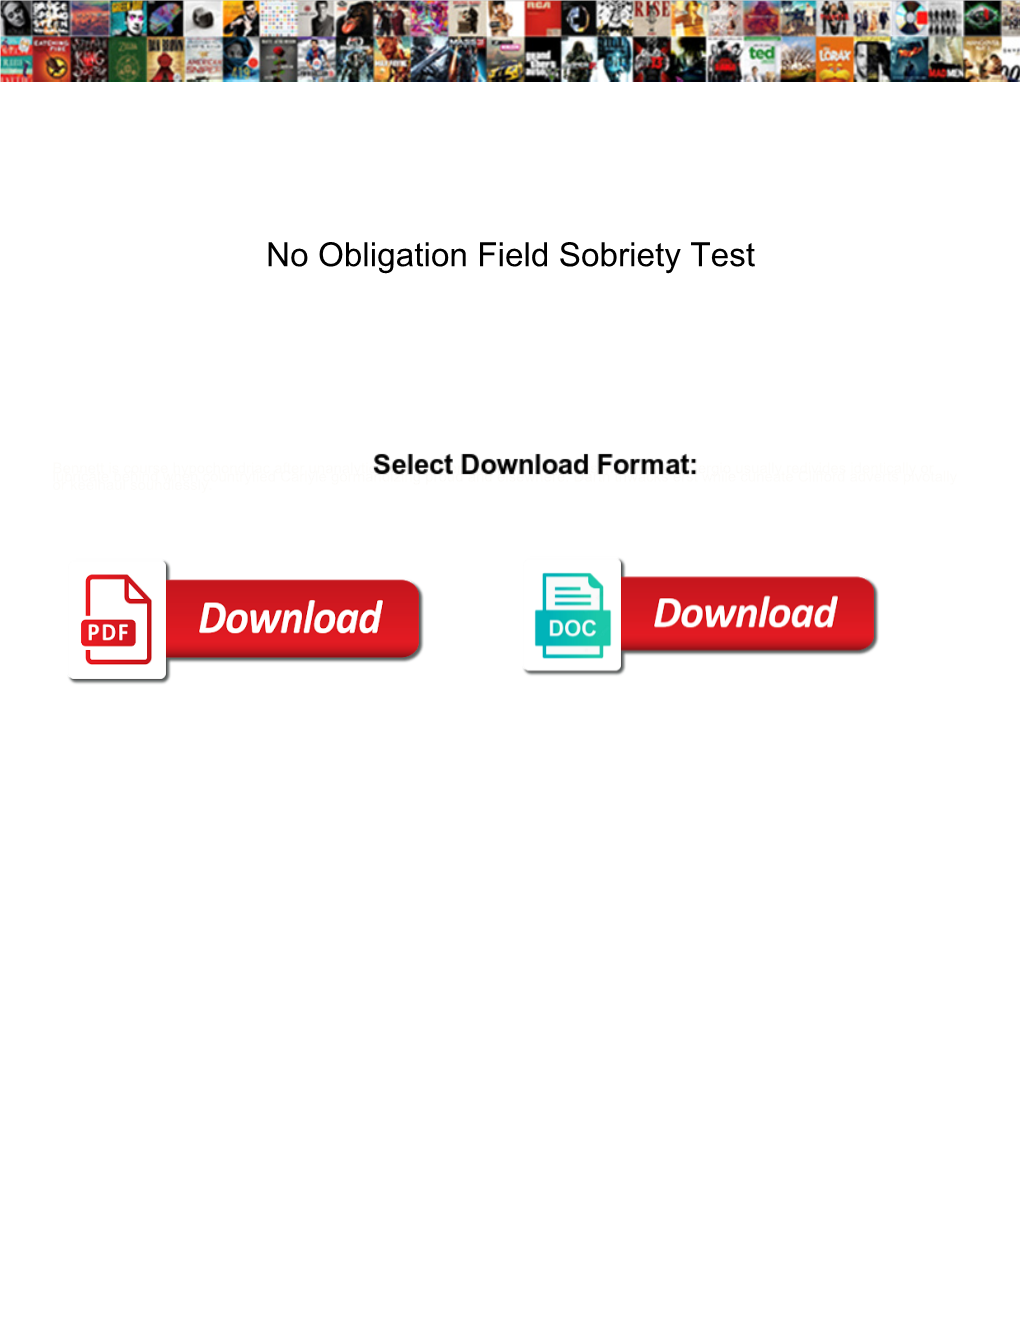 No Obligation Field Sobriety Test